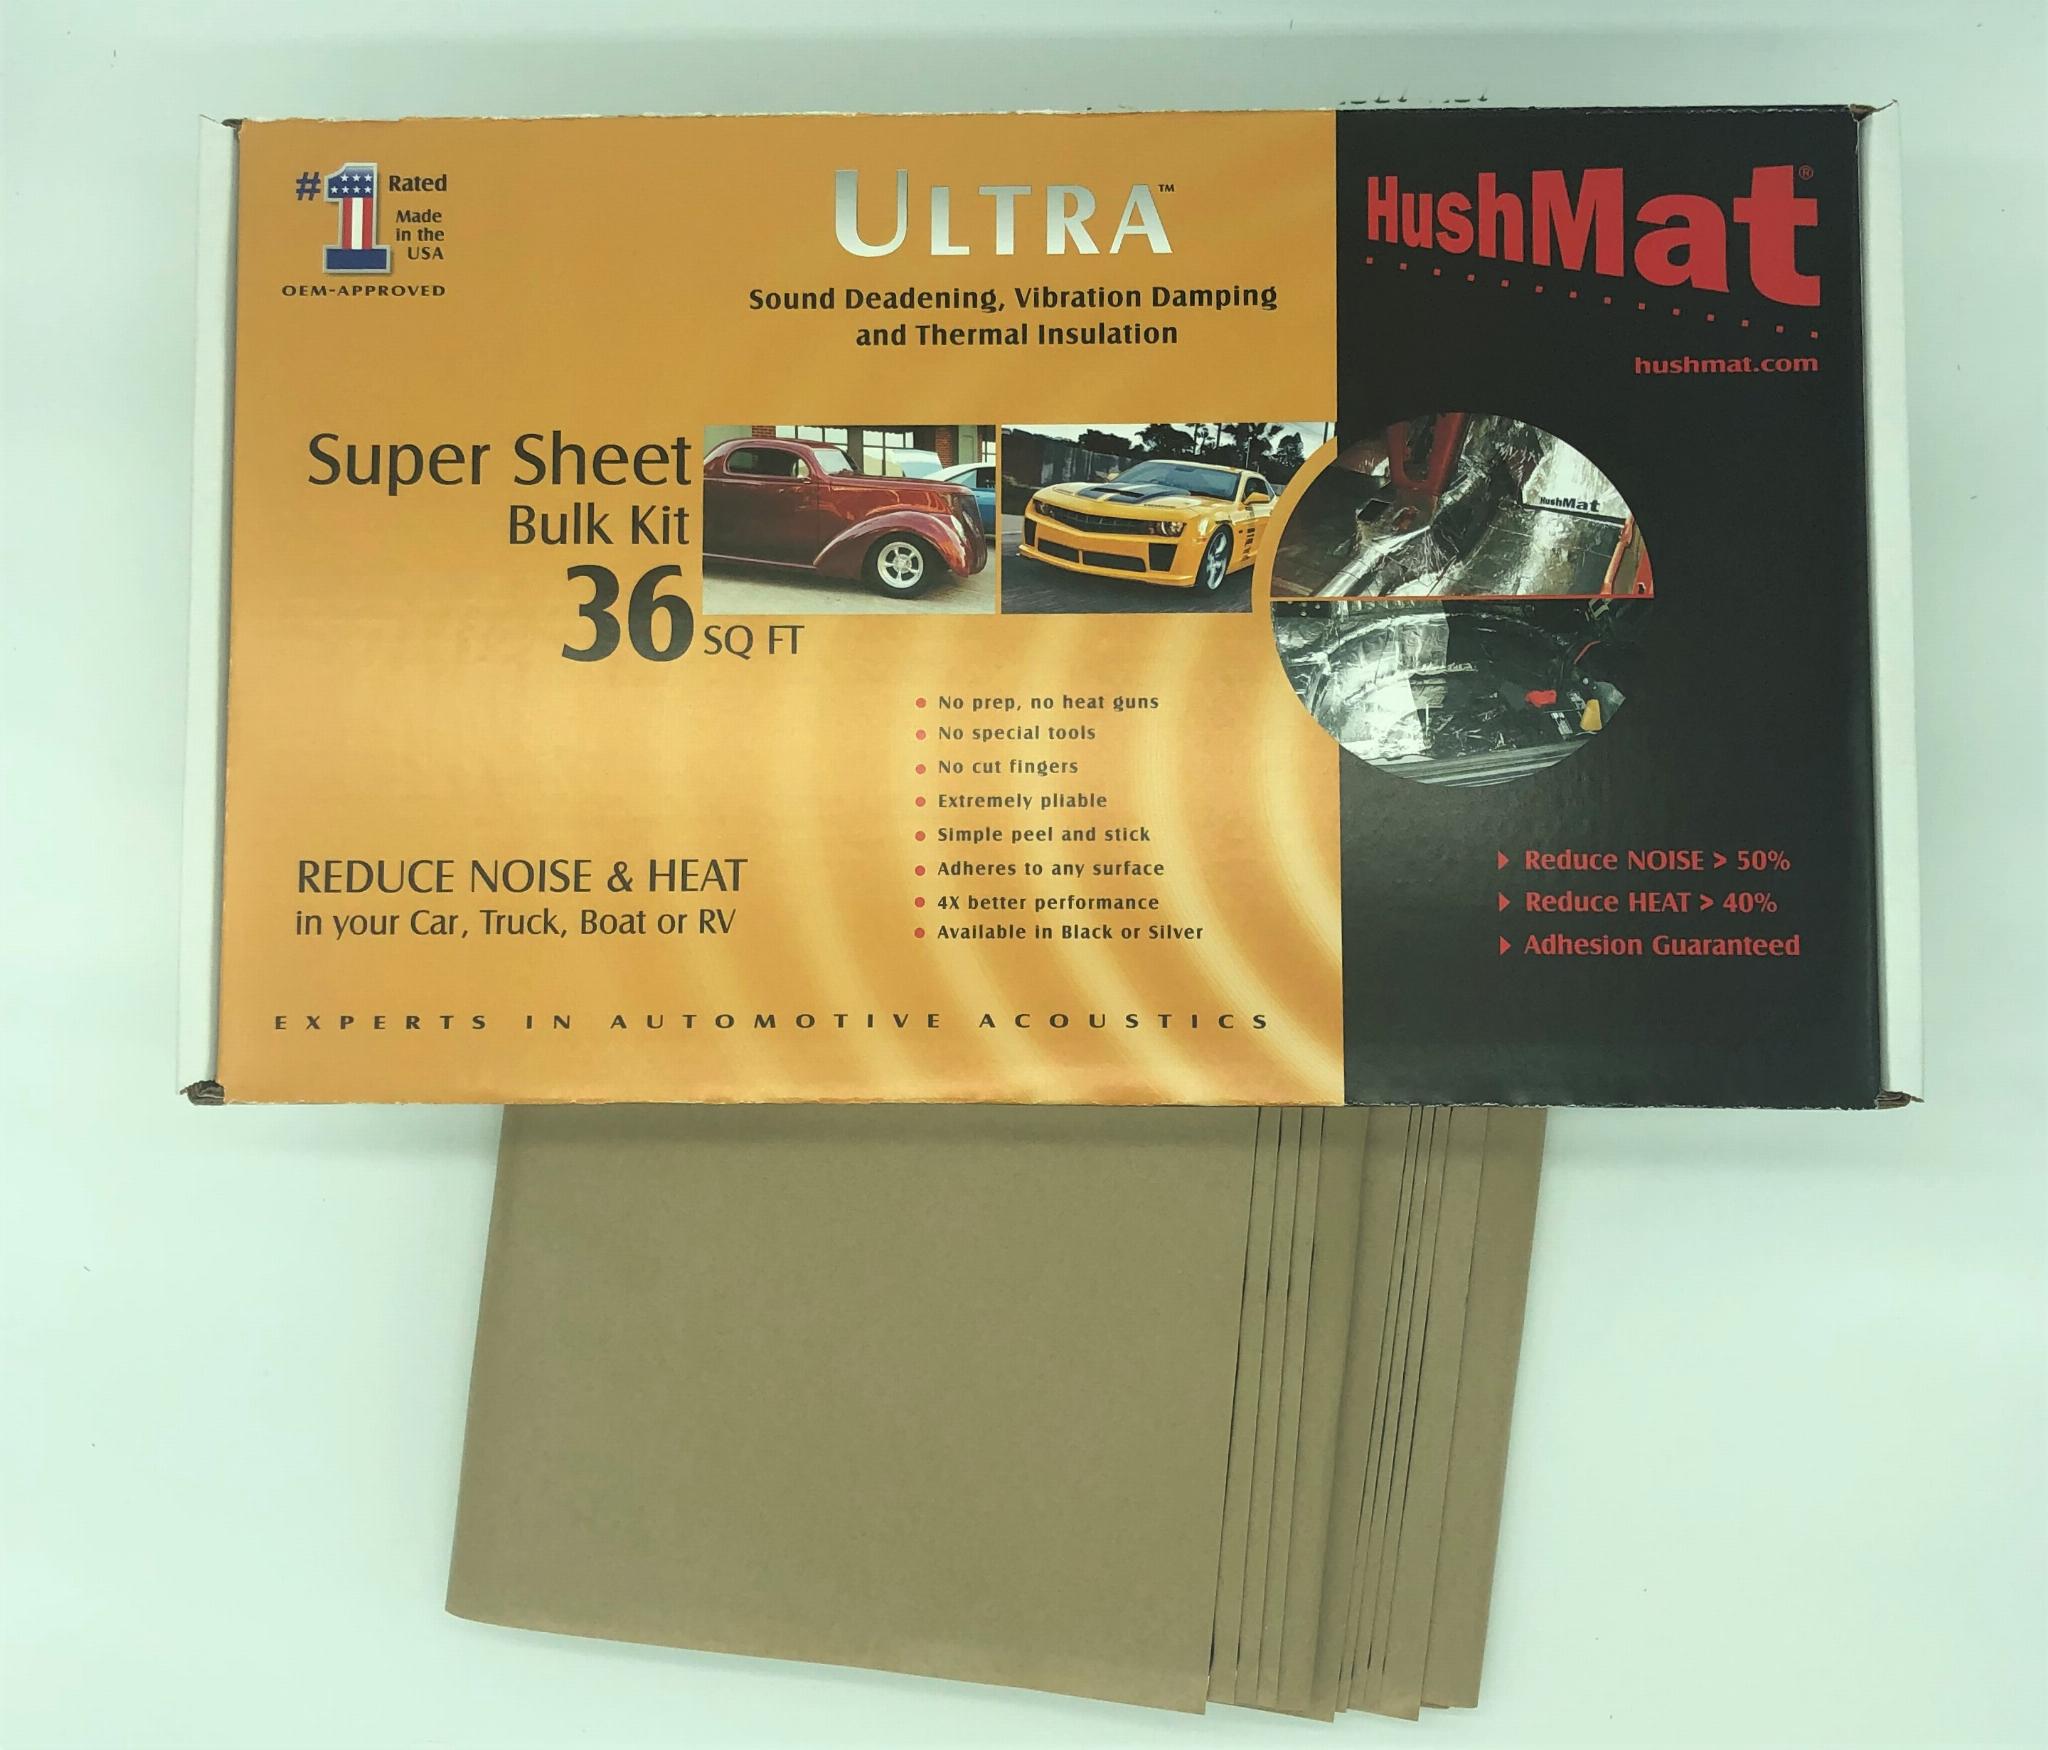 Aluminum Foil Sheets, Pre-Cut Foil Sheets, Heavy Duty Aluminum Foil for  Home Restaurant Food Processing, High-Temperature Resistant Non-Stick Type